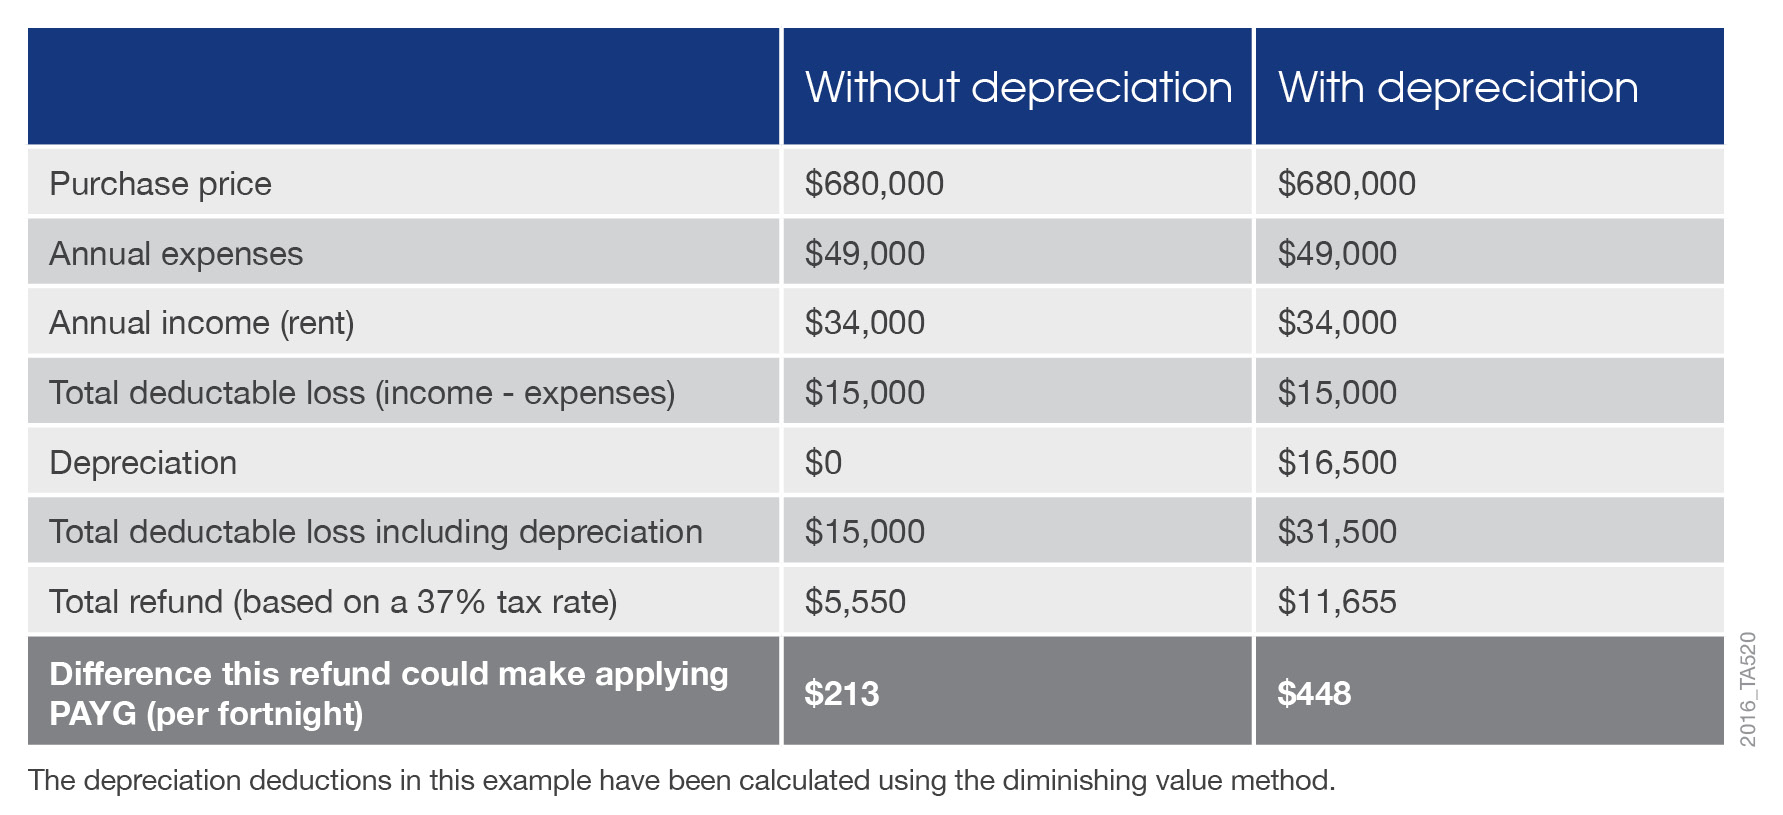 Depreciation deductions